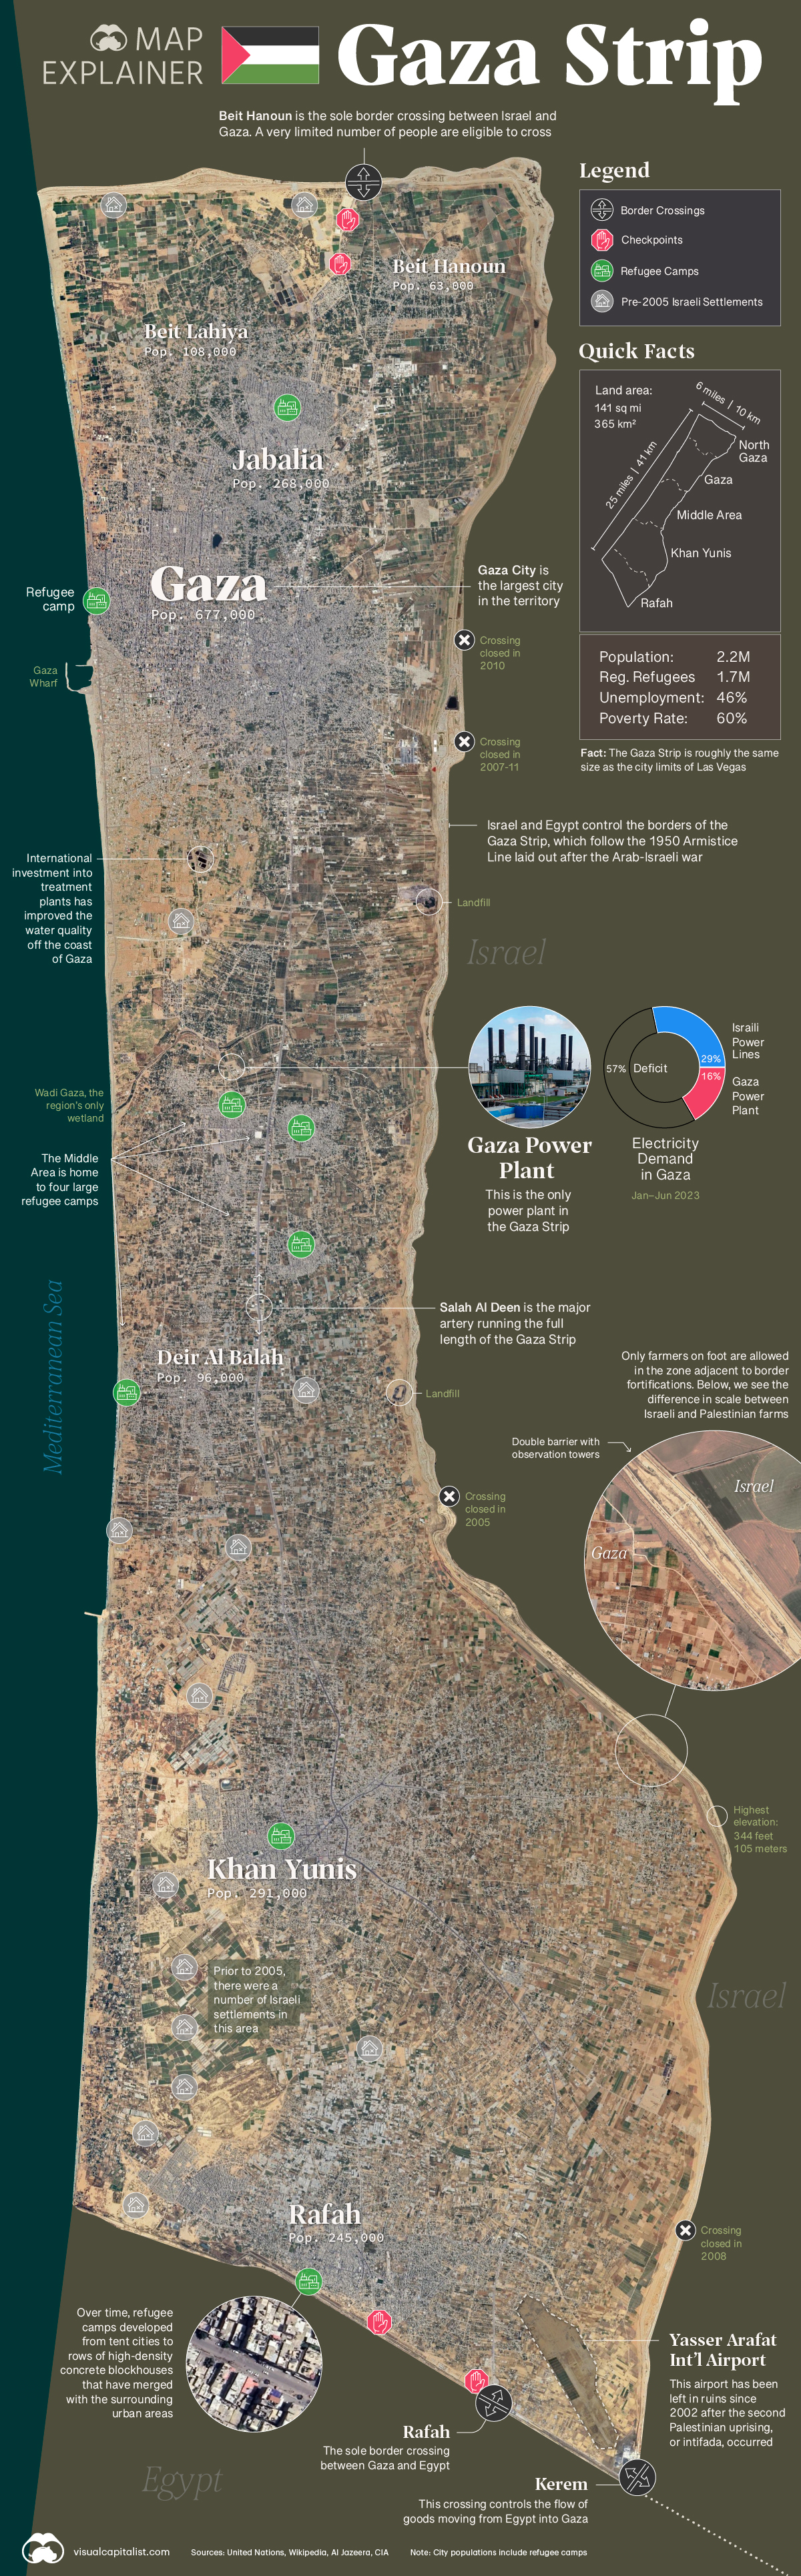 Map Explainer: The Gaza Strip